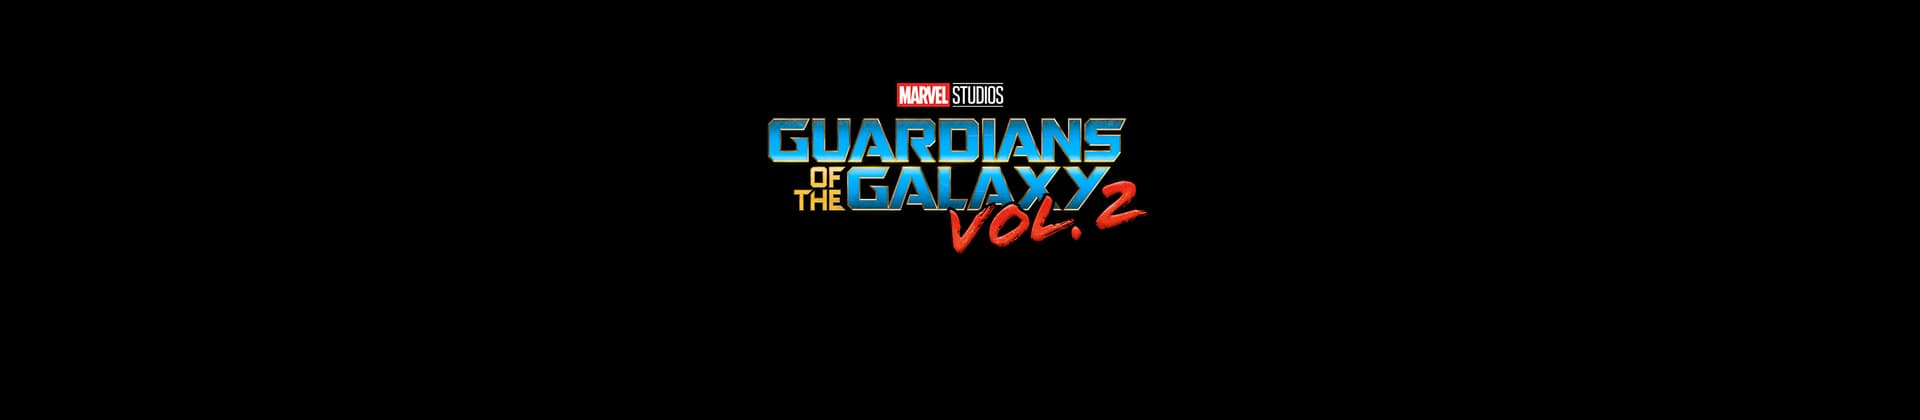 Guardians of the Galaxy Vol. 2 Movie Logo On Black